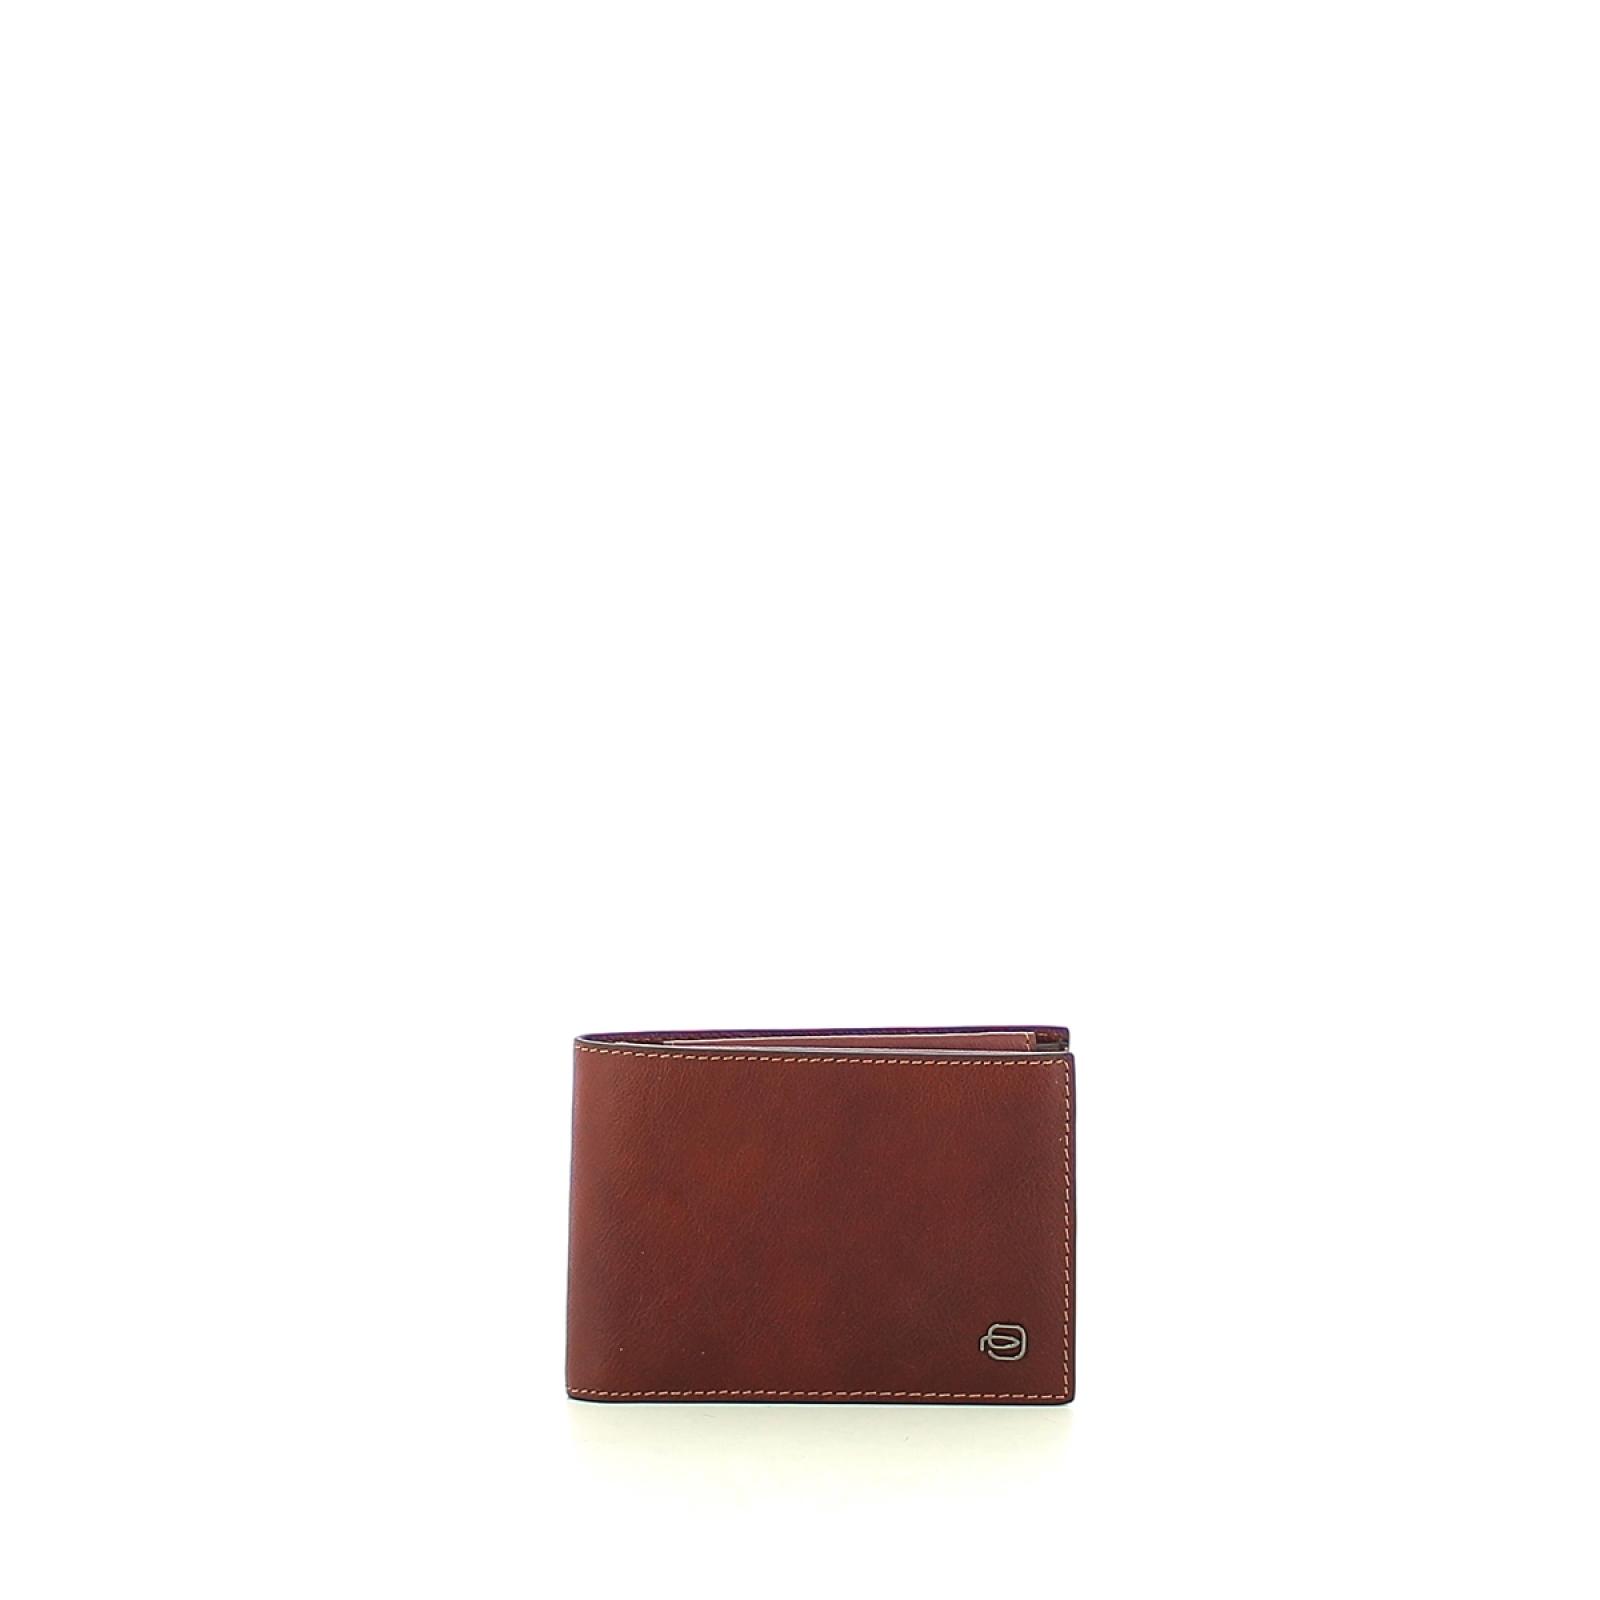 Wallet with coin pouch Black Square-CU-UN